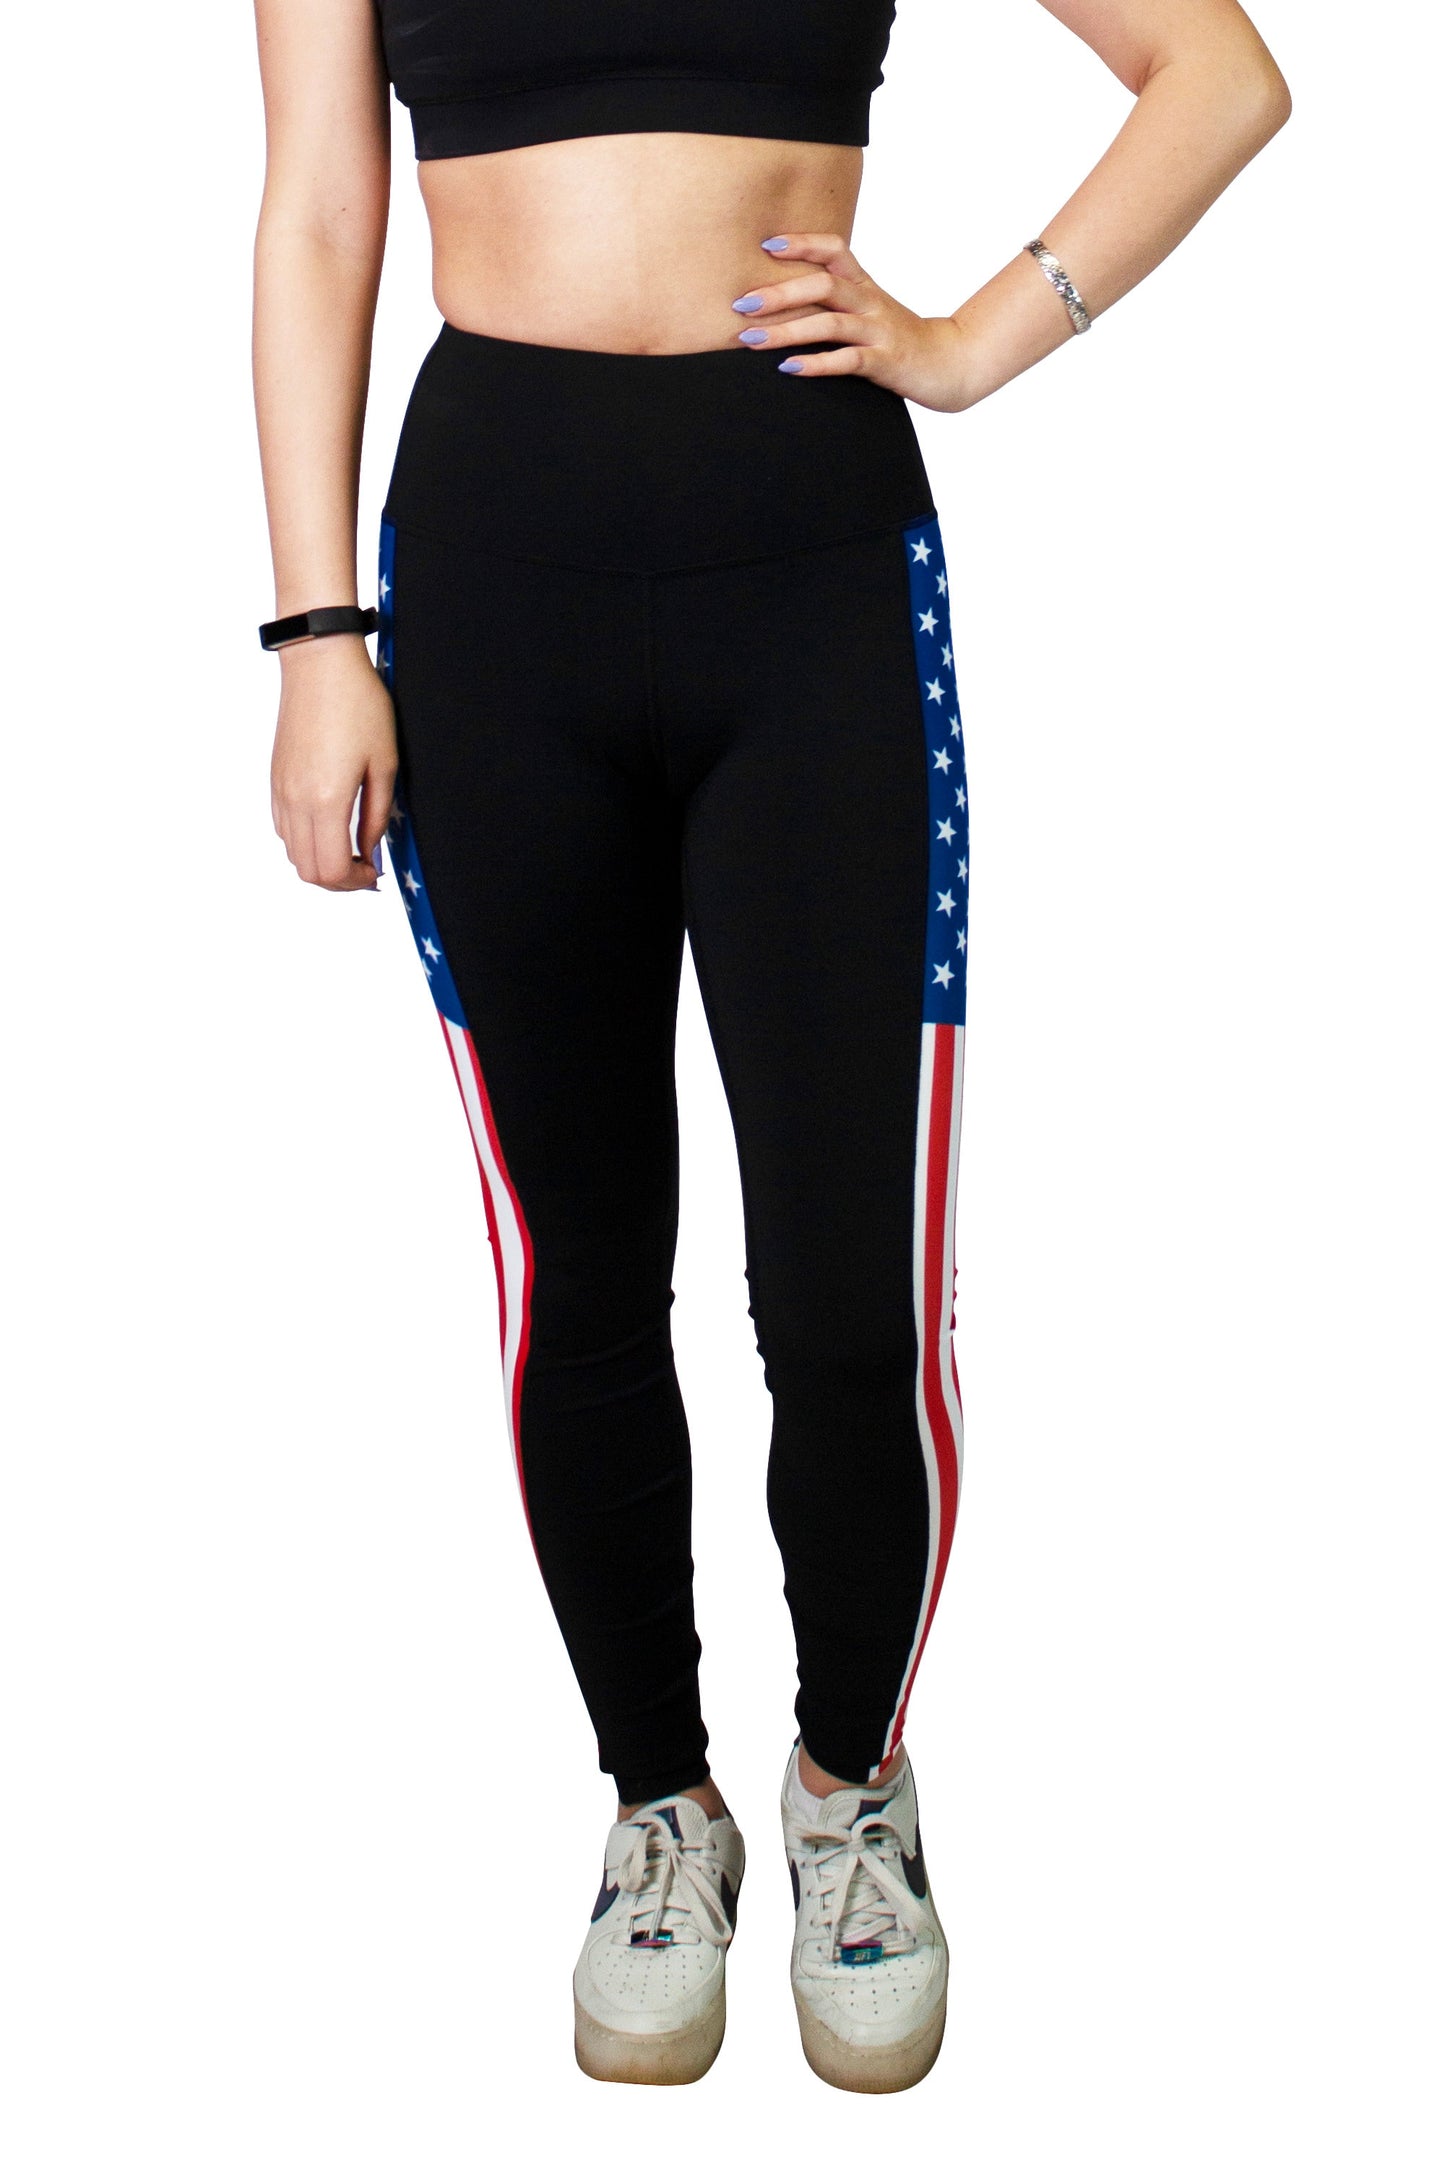 American Flag USA Full Length Yoga Pant Leggings